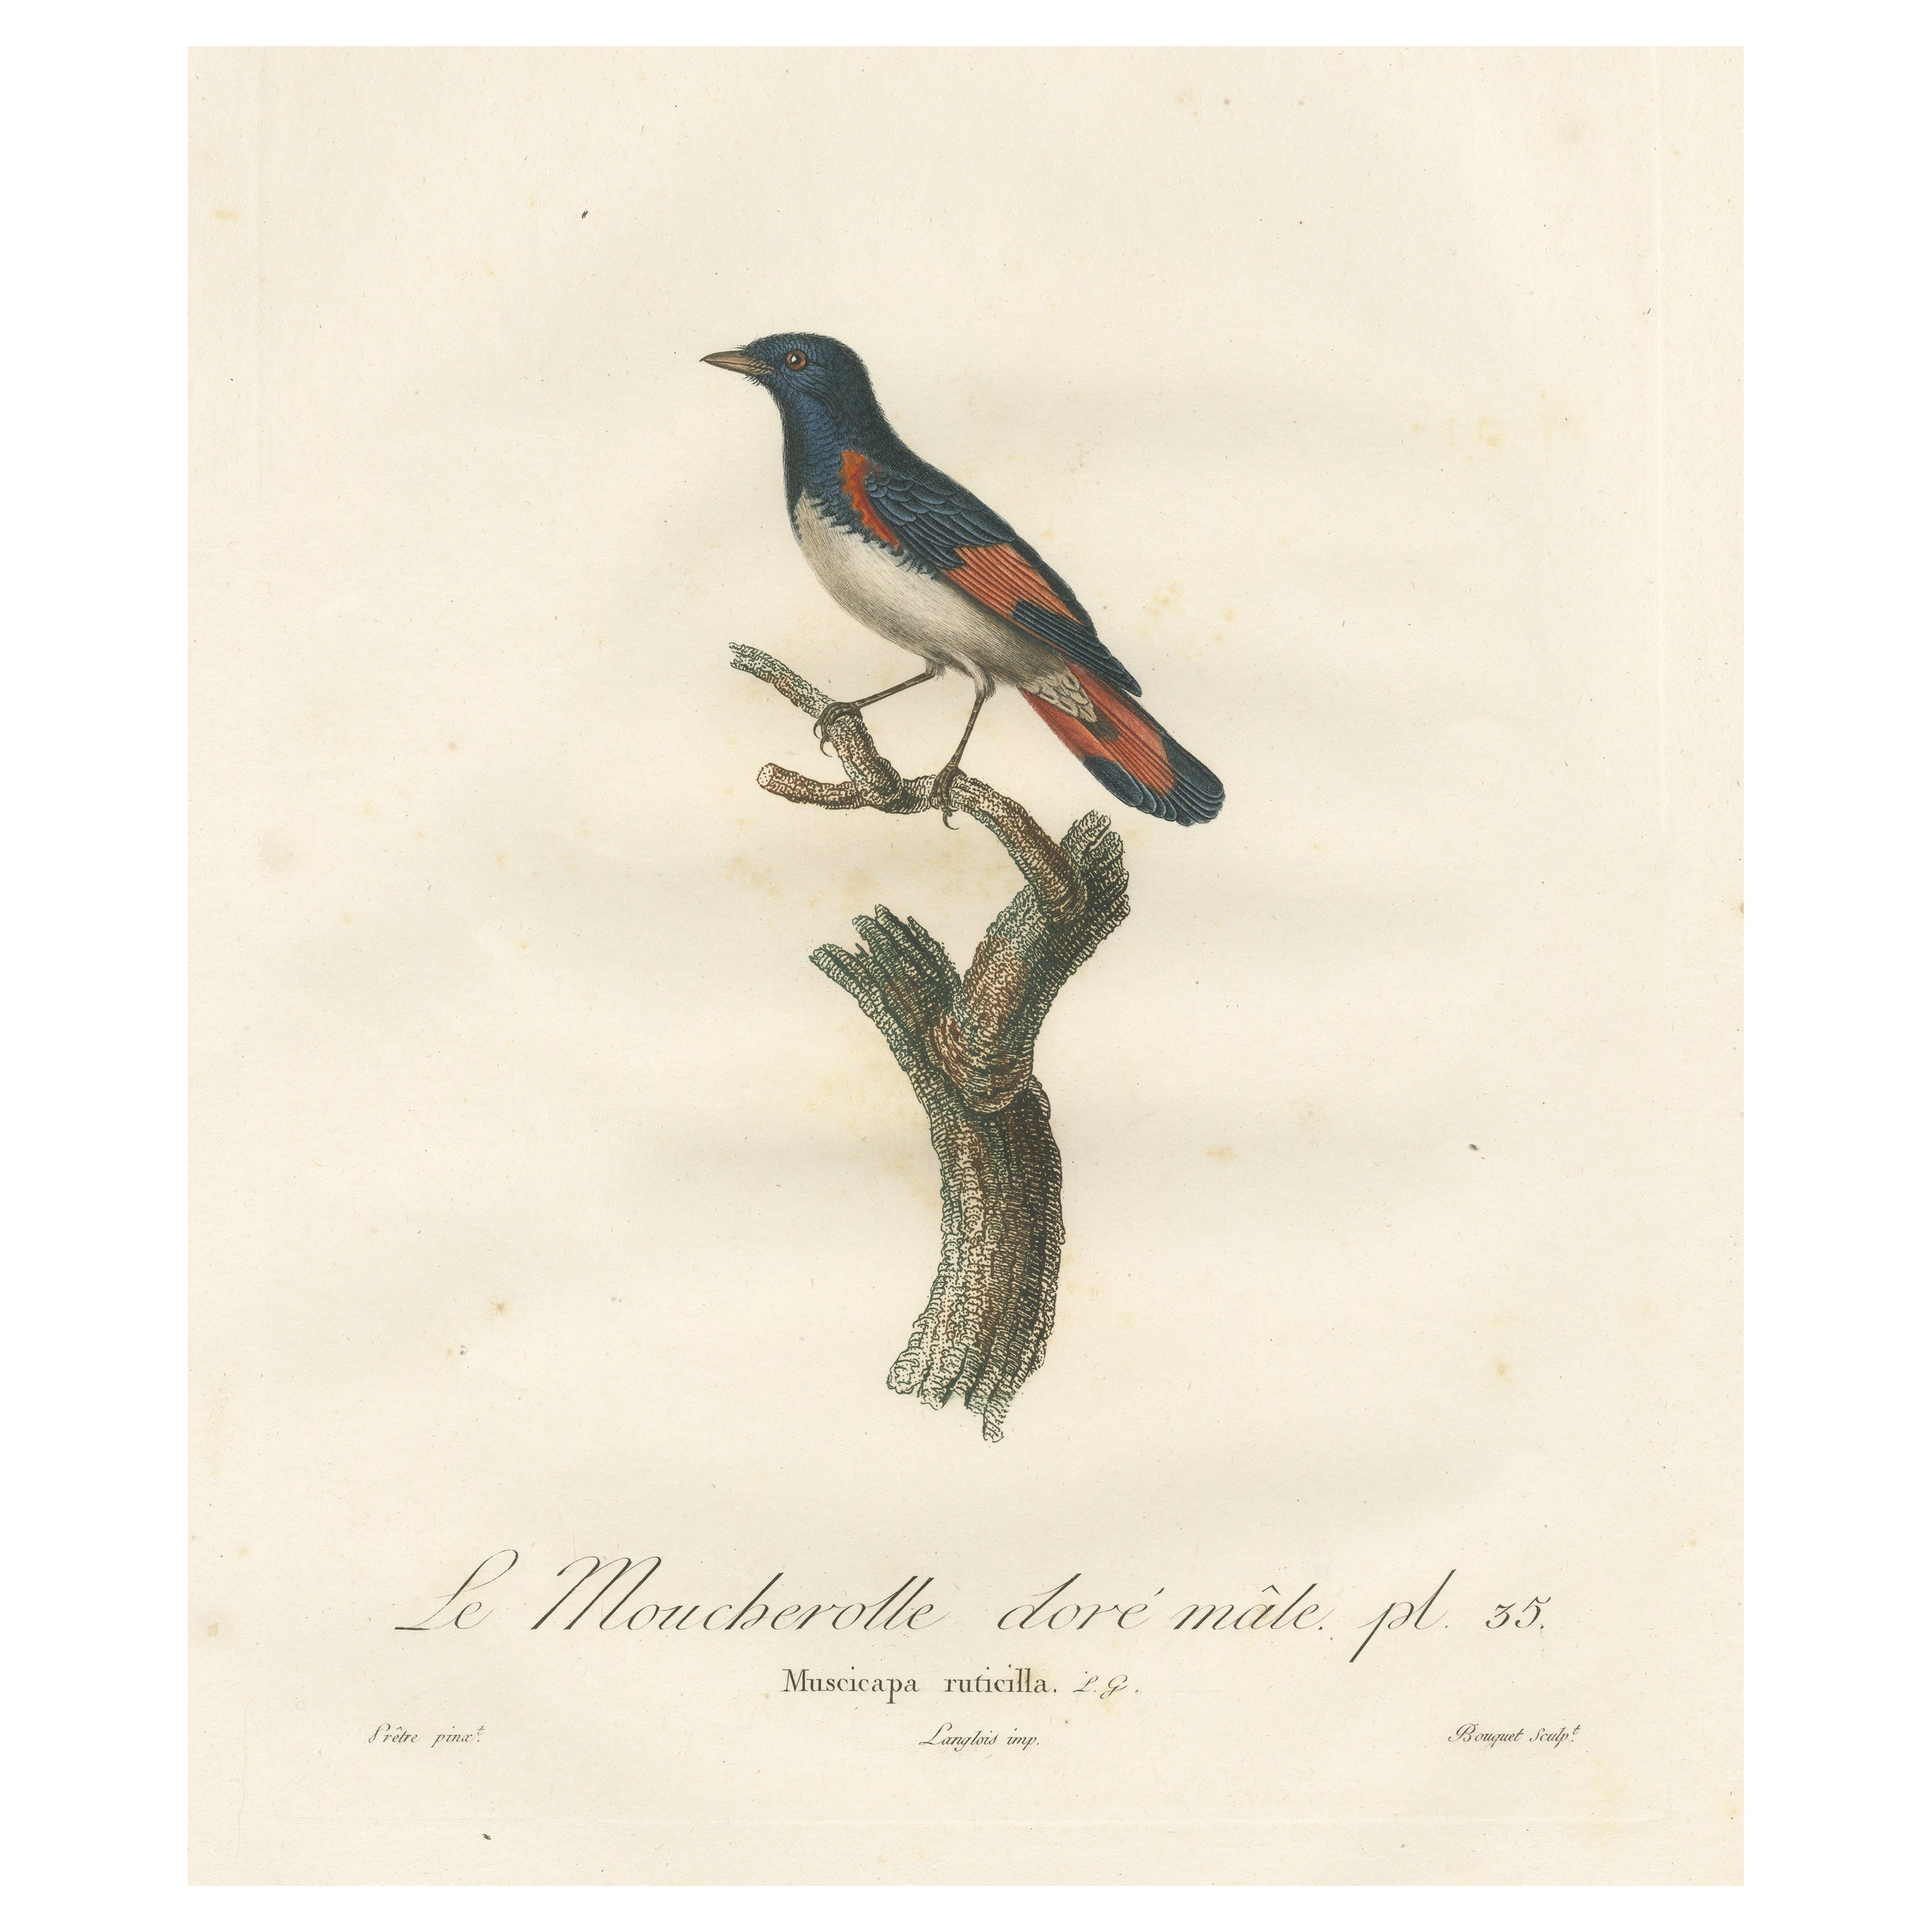 1807 American Redstart Illustration - 'Le Moucherolle doré mâle' Old Bird Print For Sale